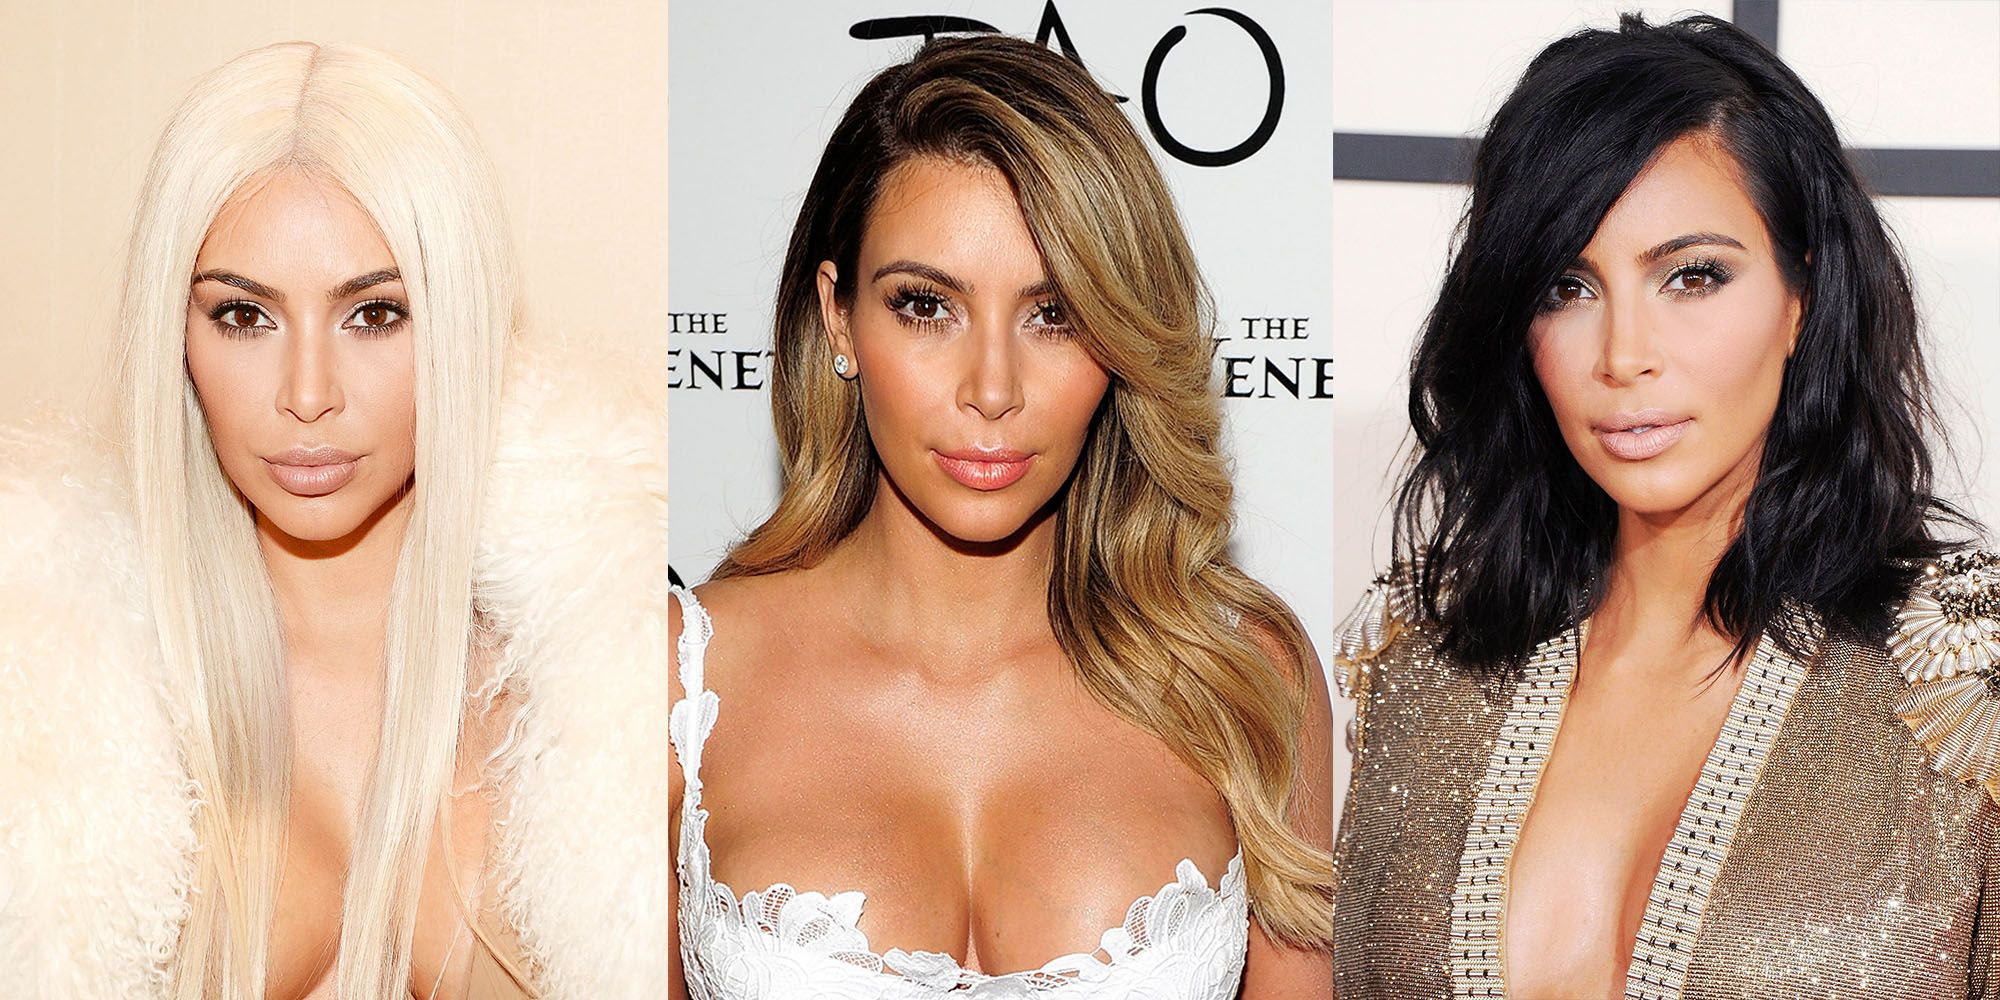 The Hair Evolution of Kim Kardashian Over the Last 10 Years